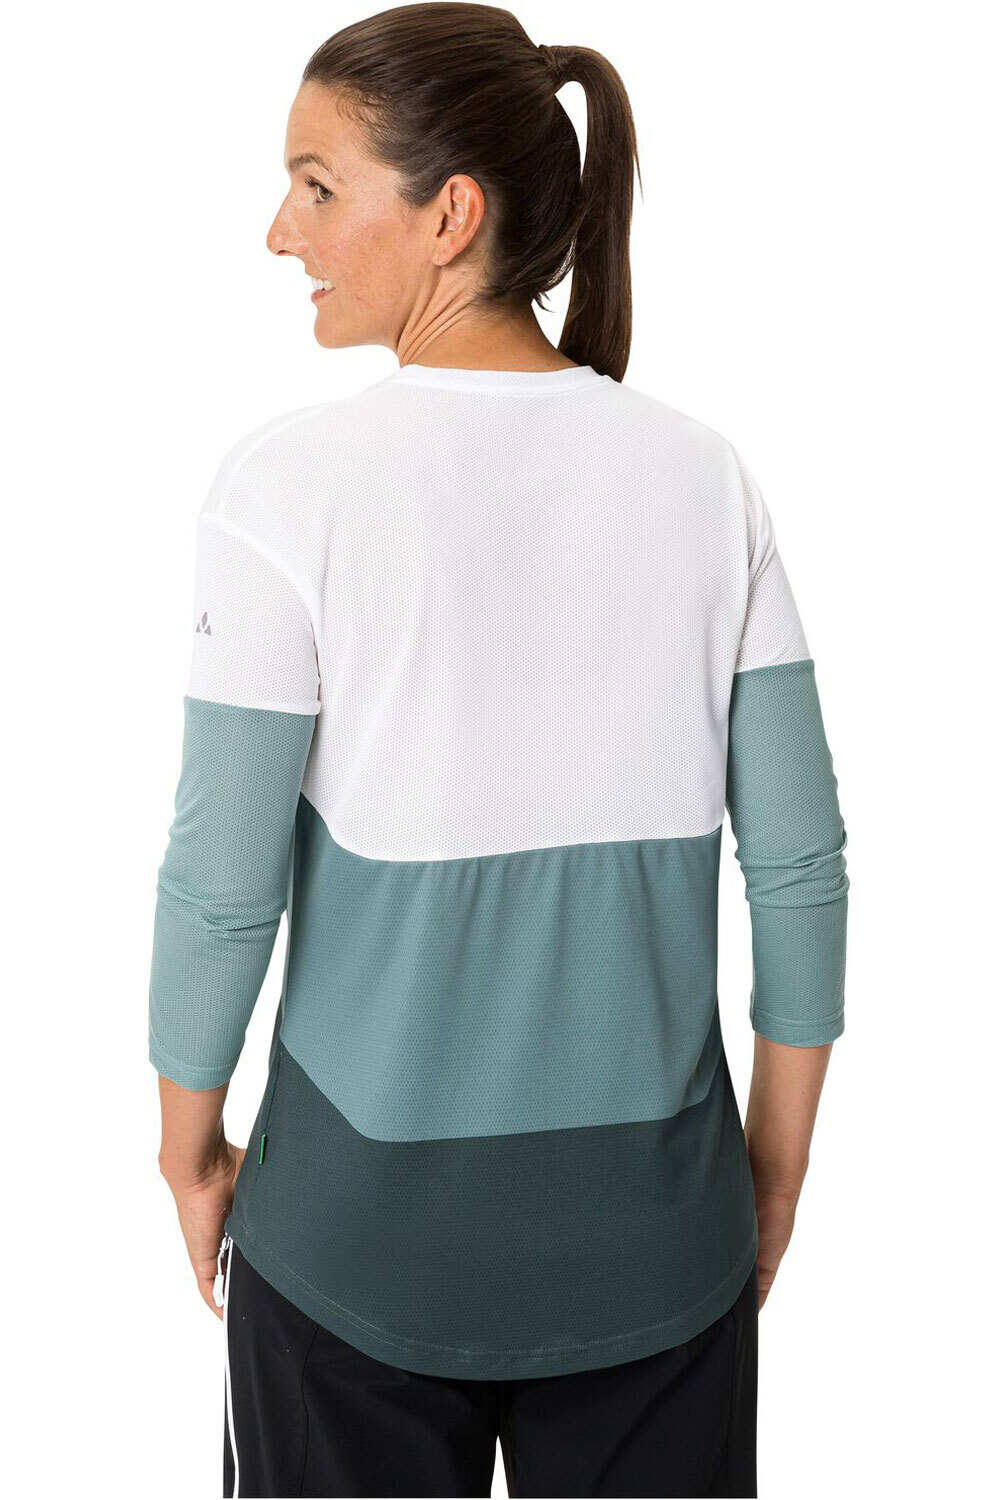 Vaude maillot manga larga mujer Women's Moab LS T-Shirt V vista trasera